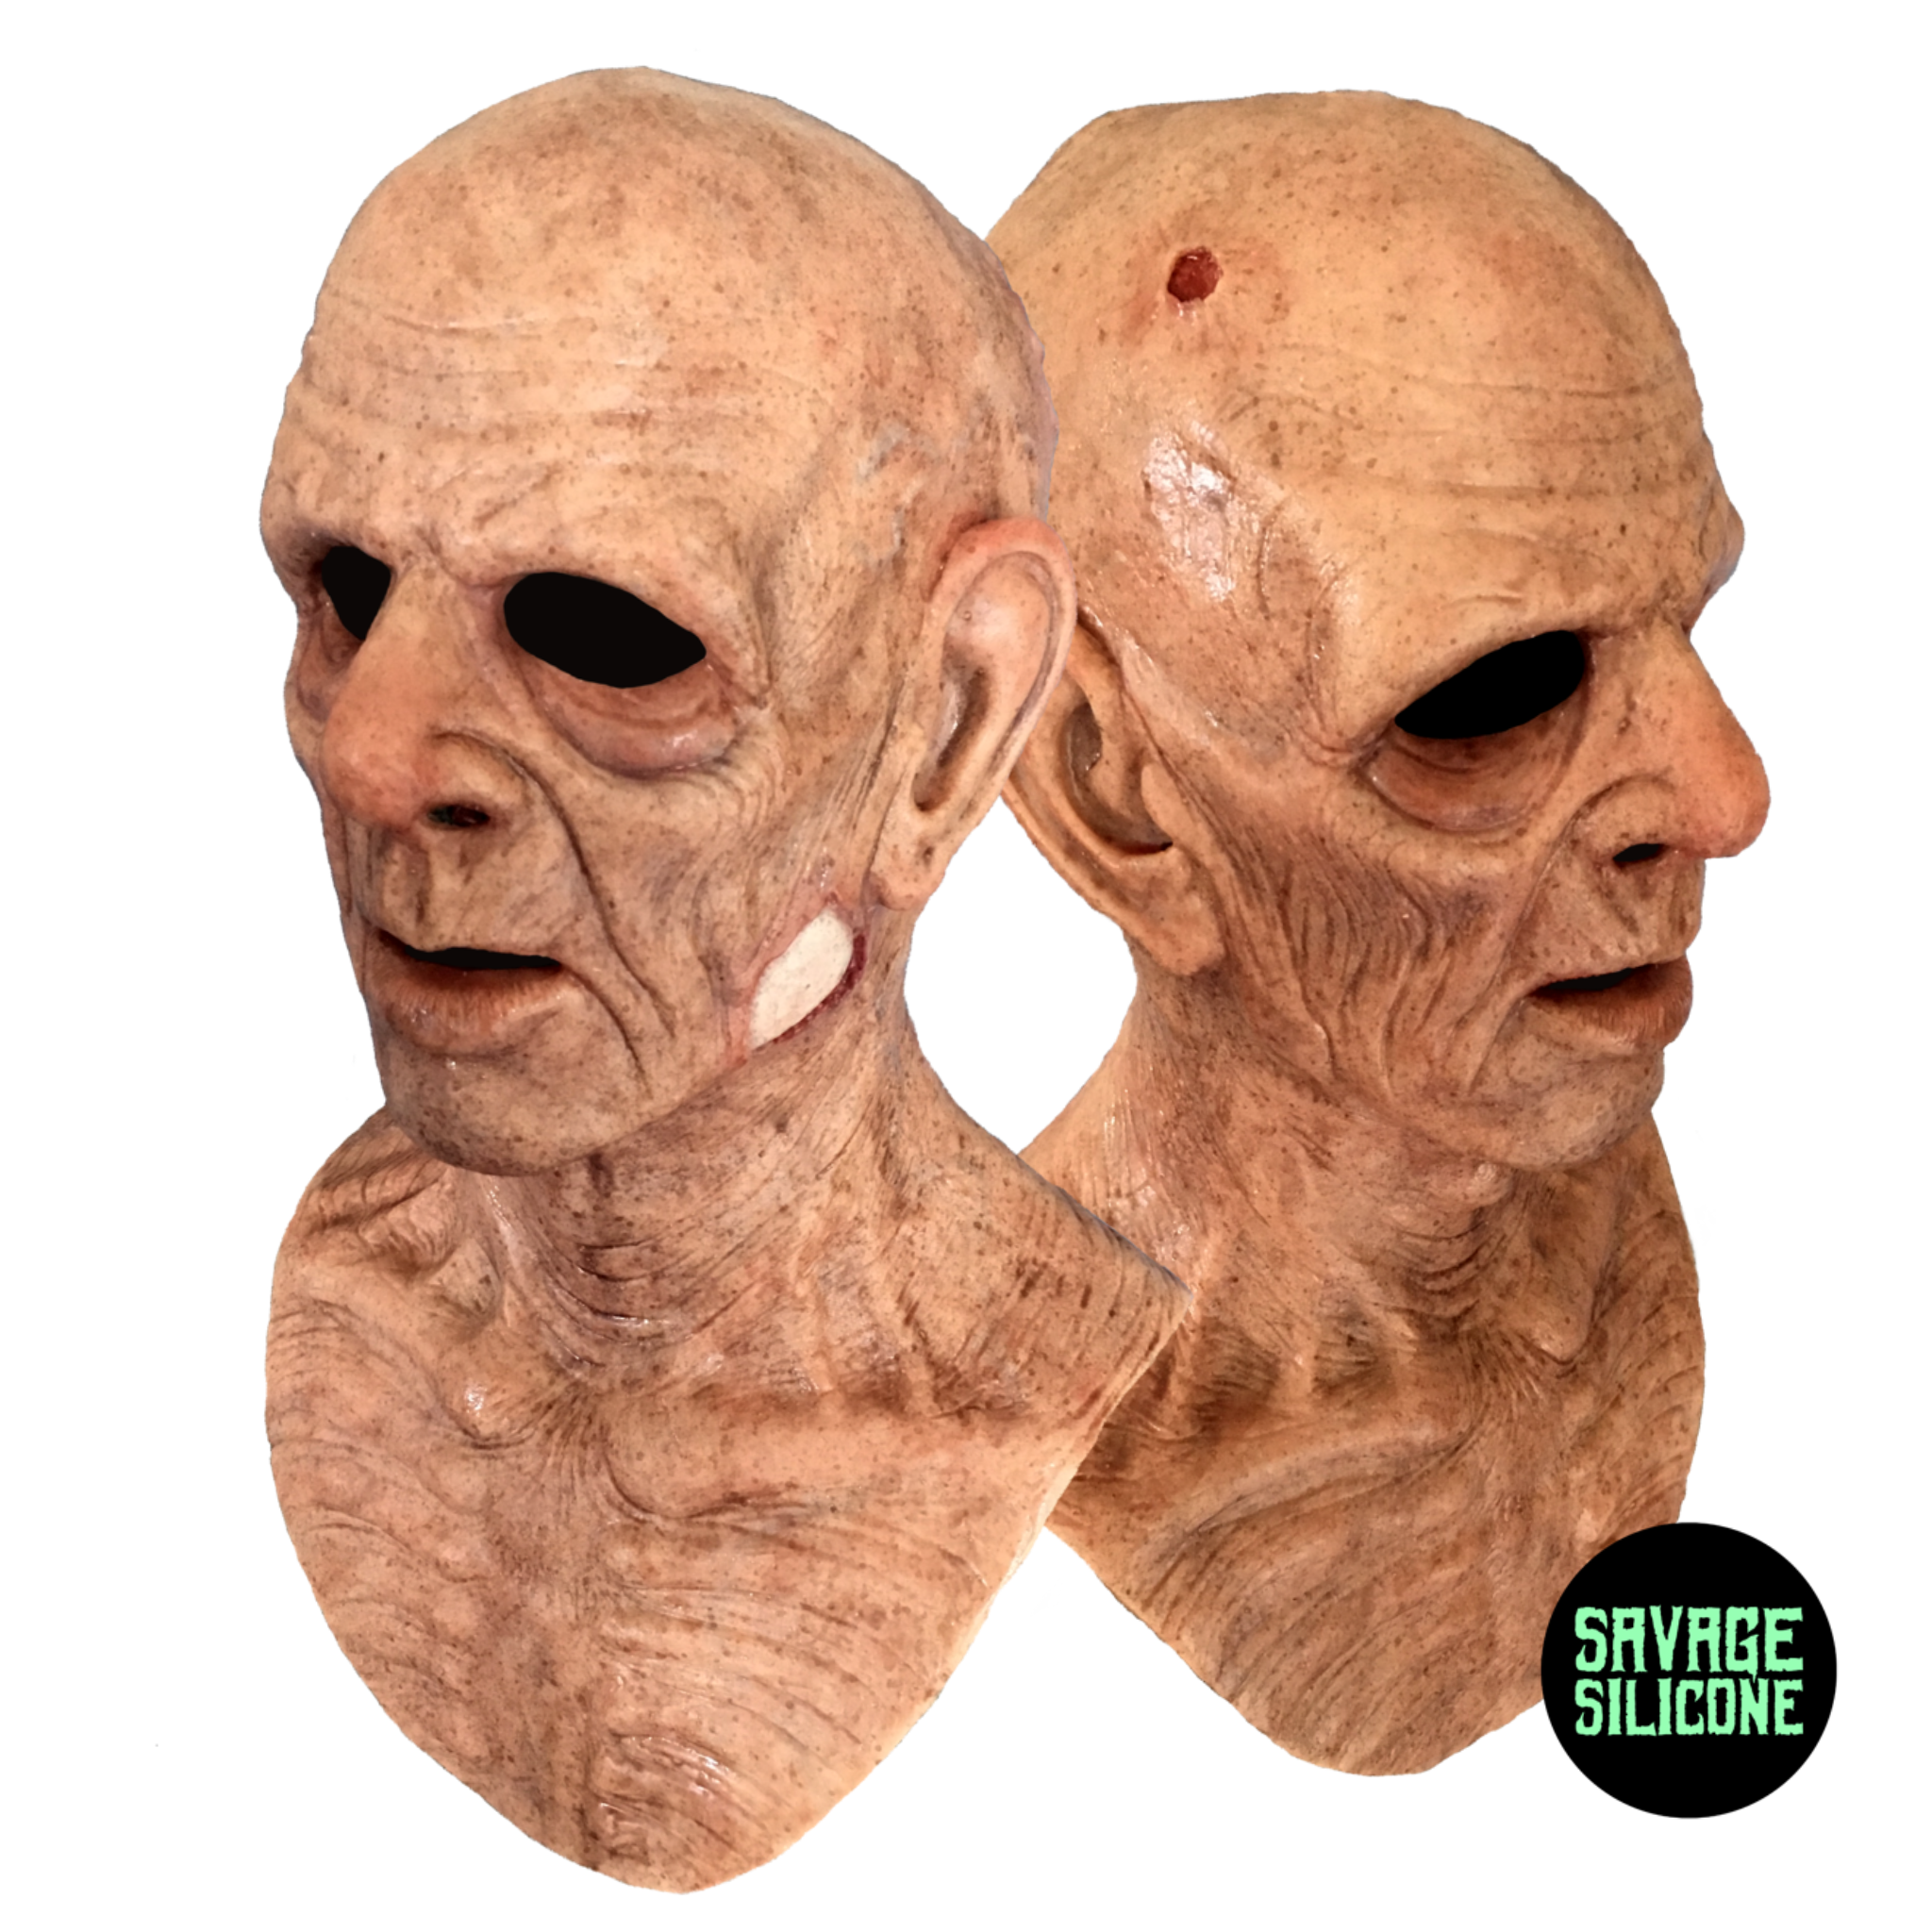 finansiel Revolutionerende Hæderlig Silicone Zombie Mask - First Stage Zombie by Savage Silicone